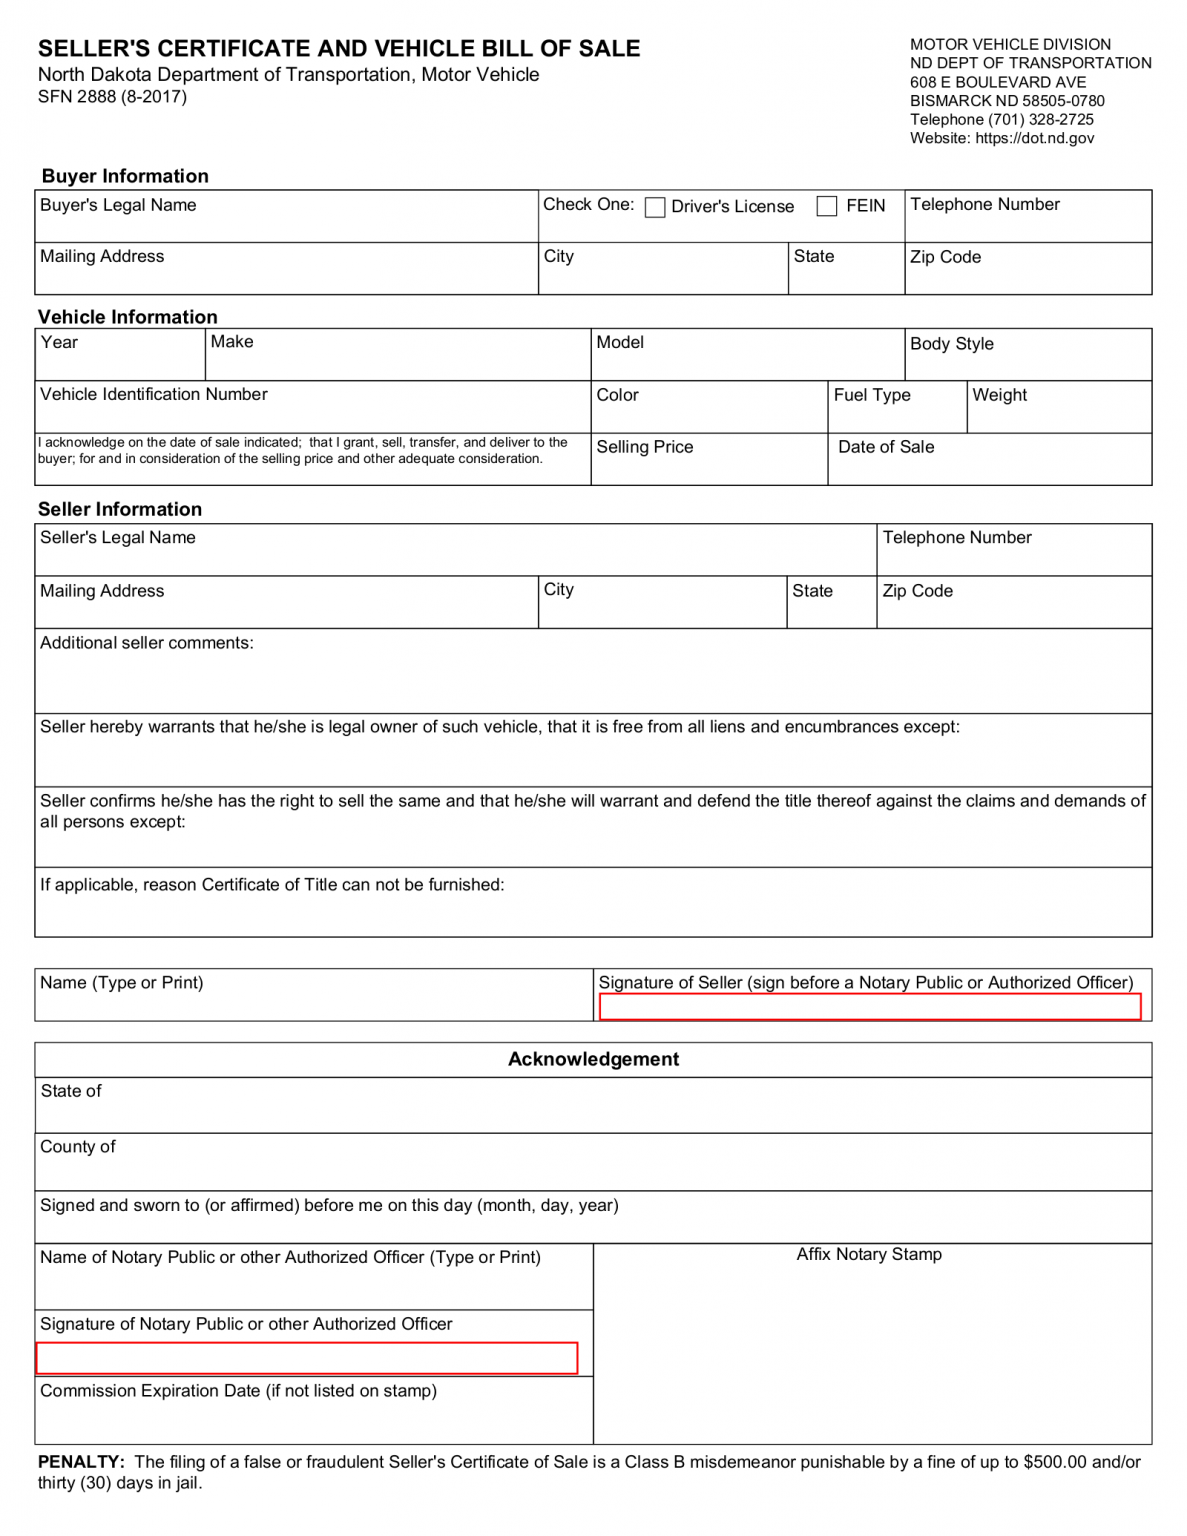 north dakota motor vehicle bill of sale form sfn 2888